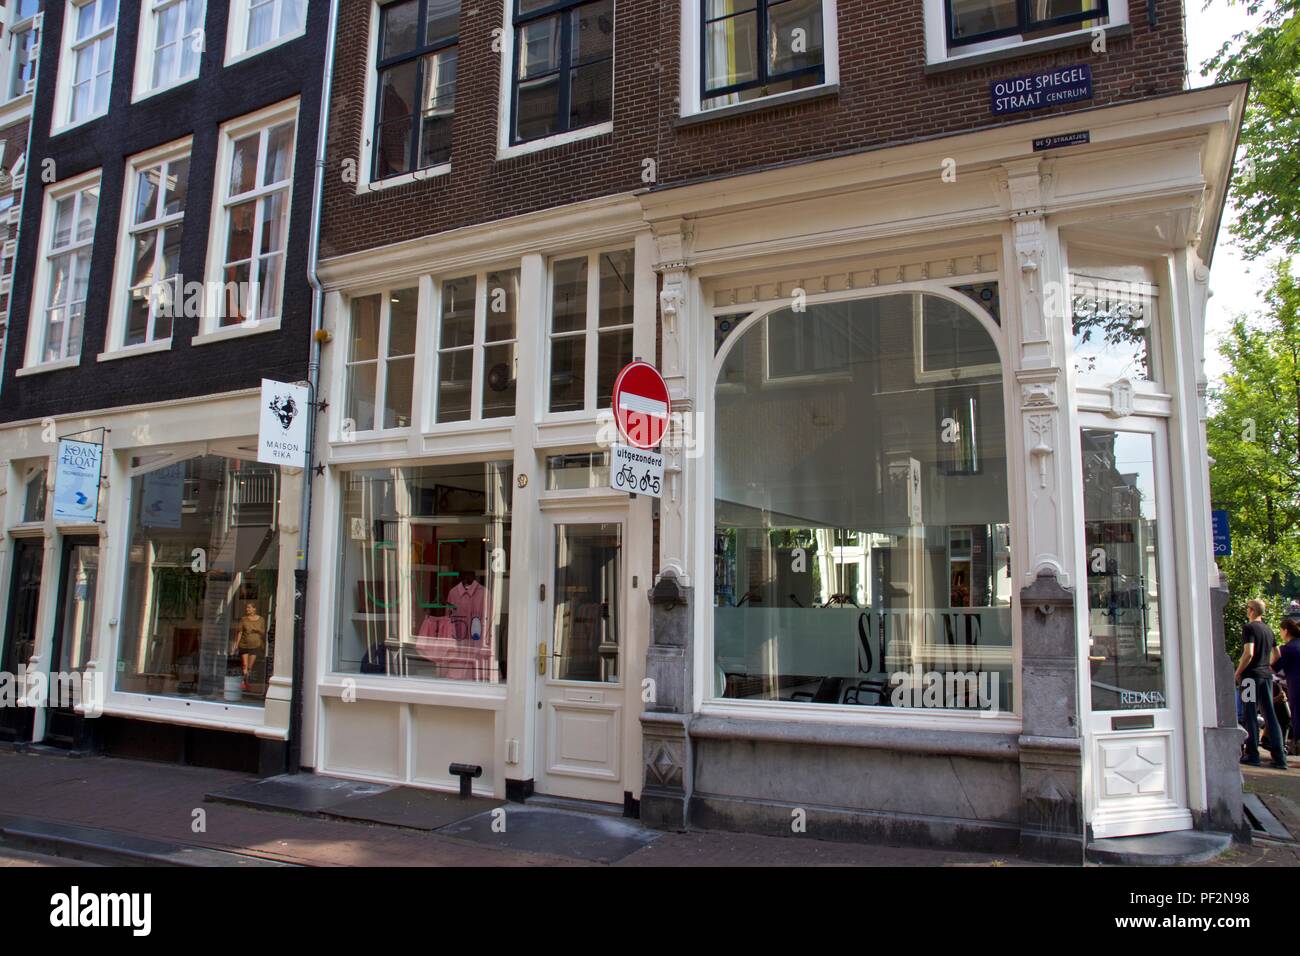 Shops on Oude Spiegelstraat, a part of de 9 straatjes in Amsterdam, the Netherlands Stock Photo